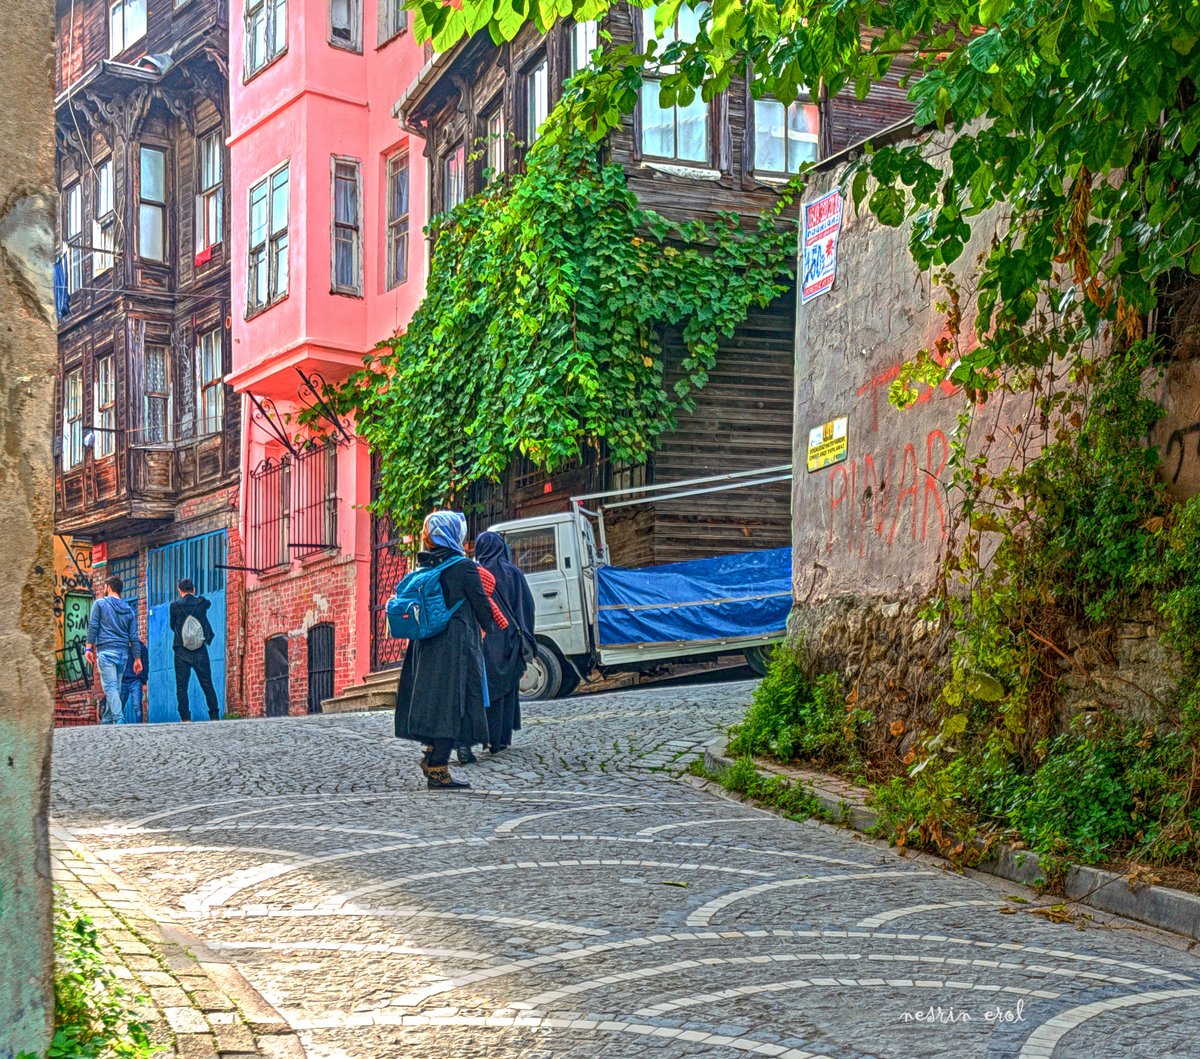 #StreetSunday #istanbul #turkey #igersistanbul #streetphotography